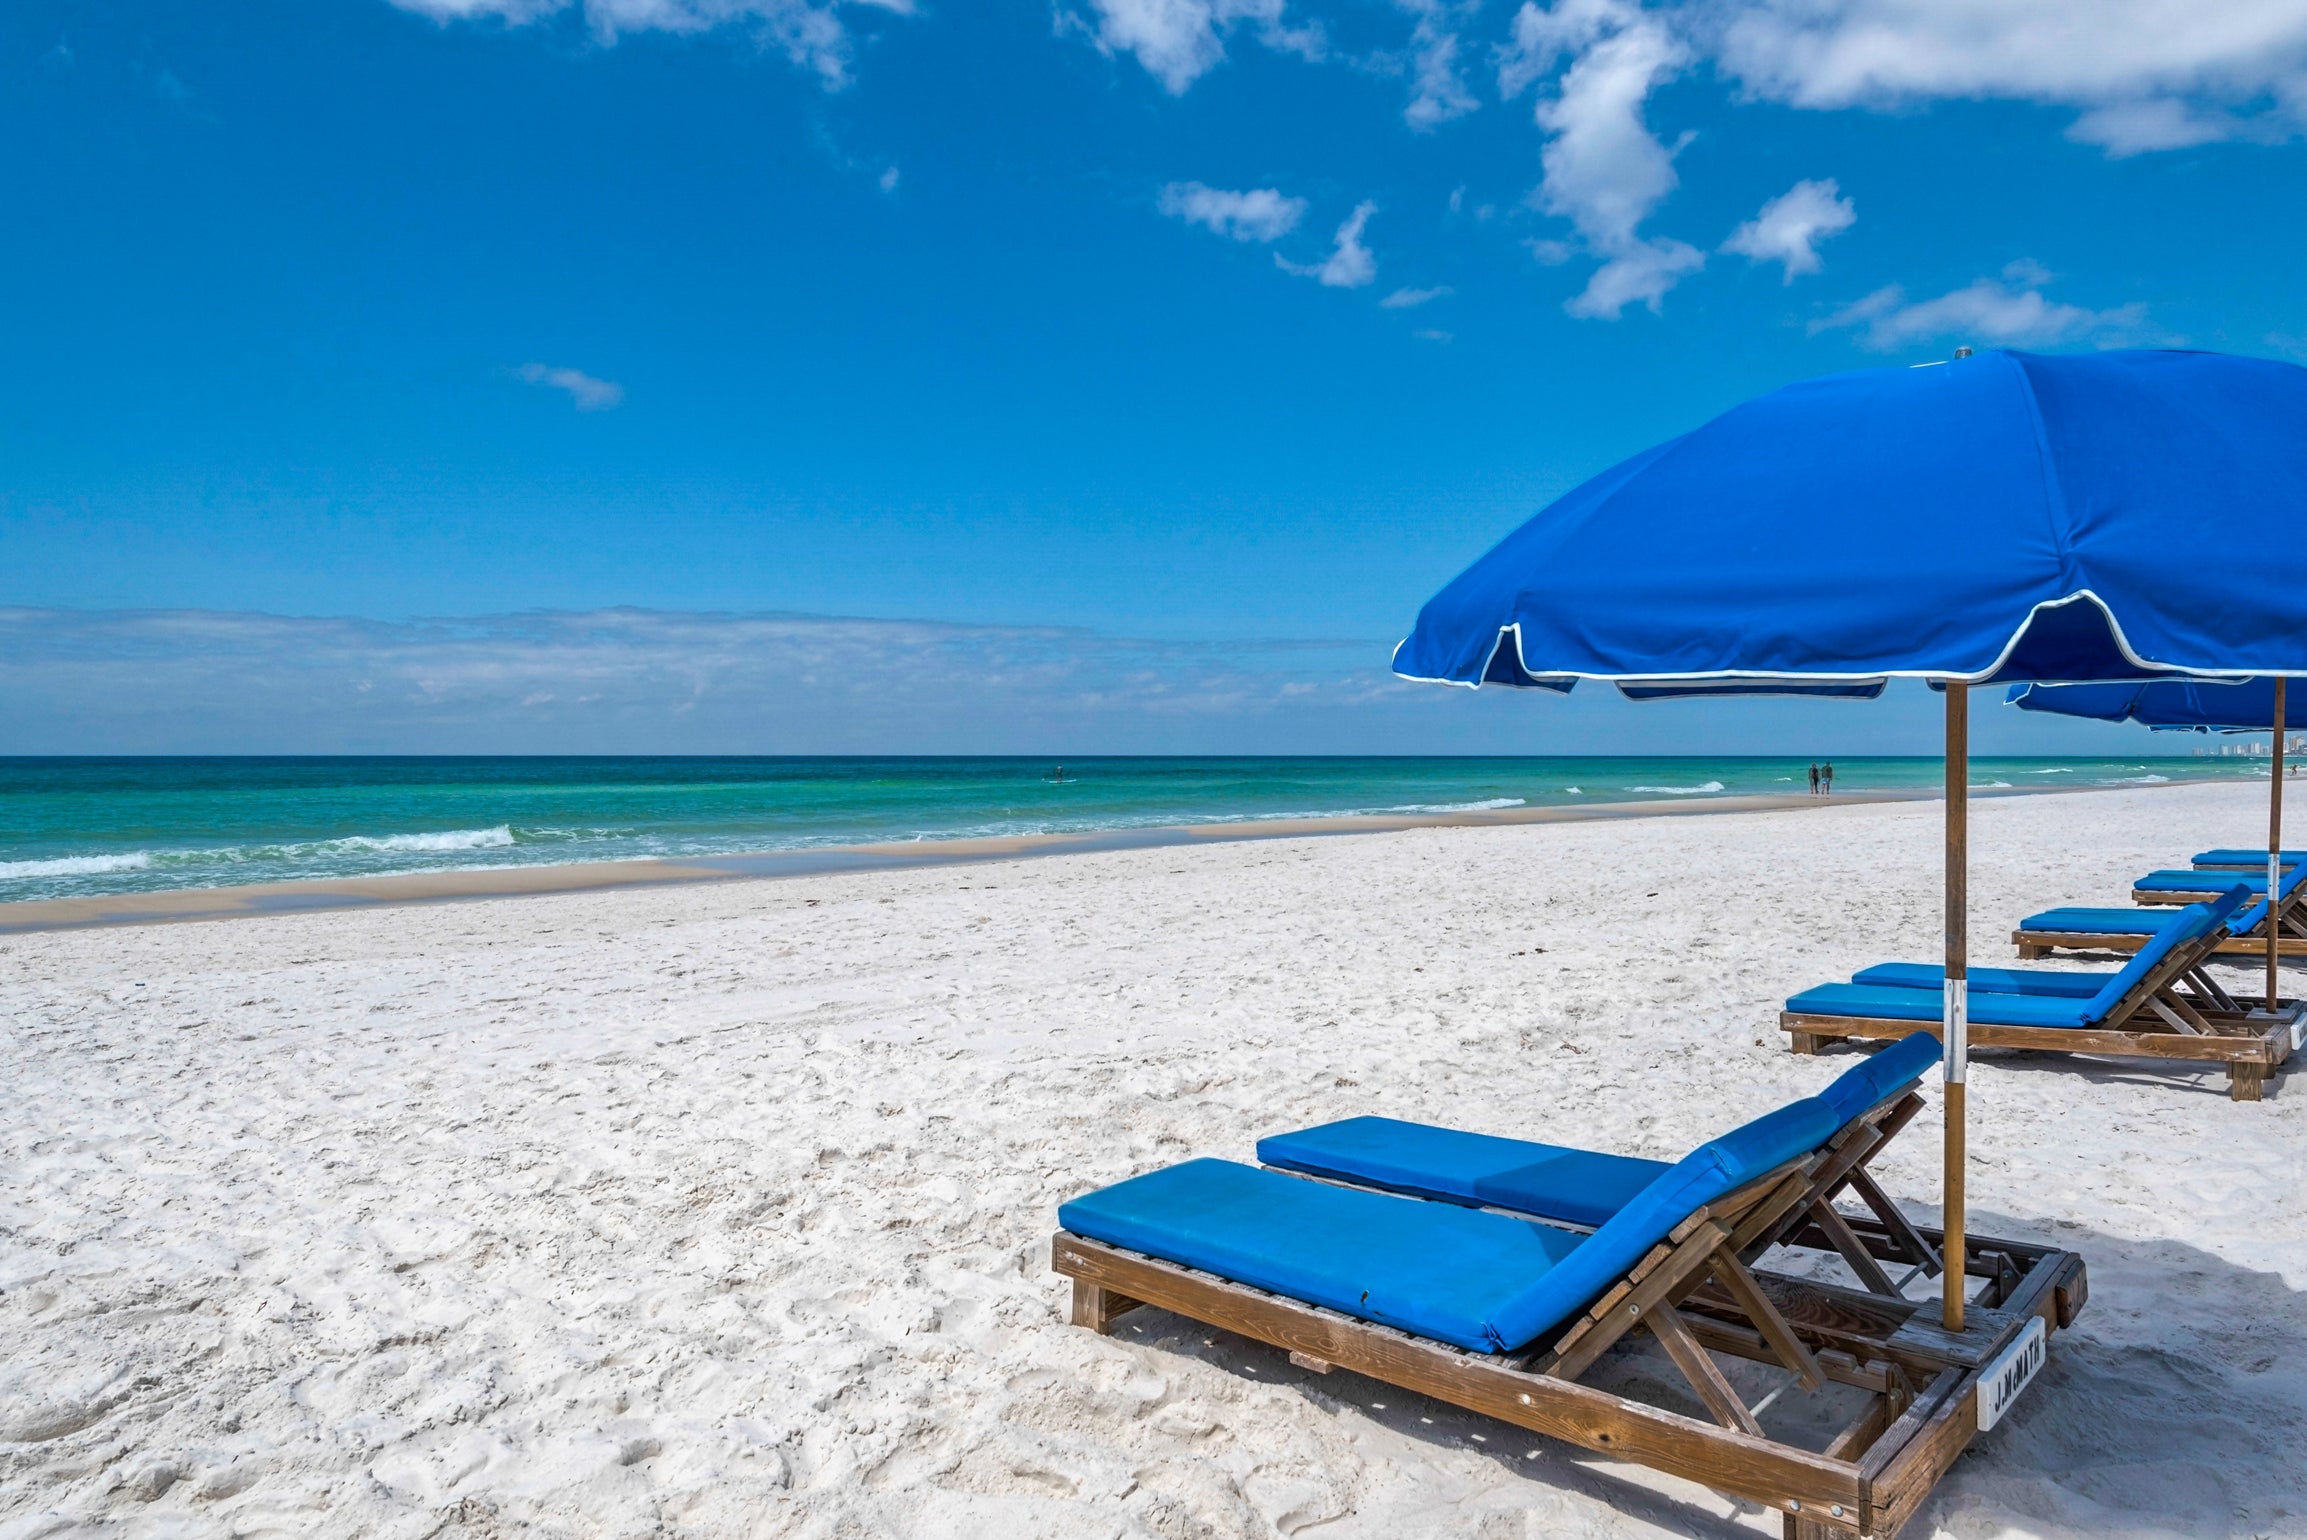 Free Beach Service! 2 Chairs and an Umbrella